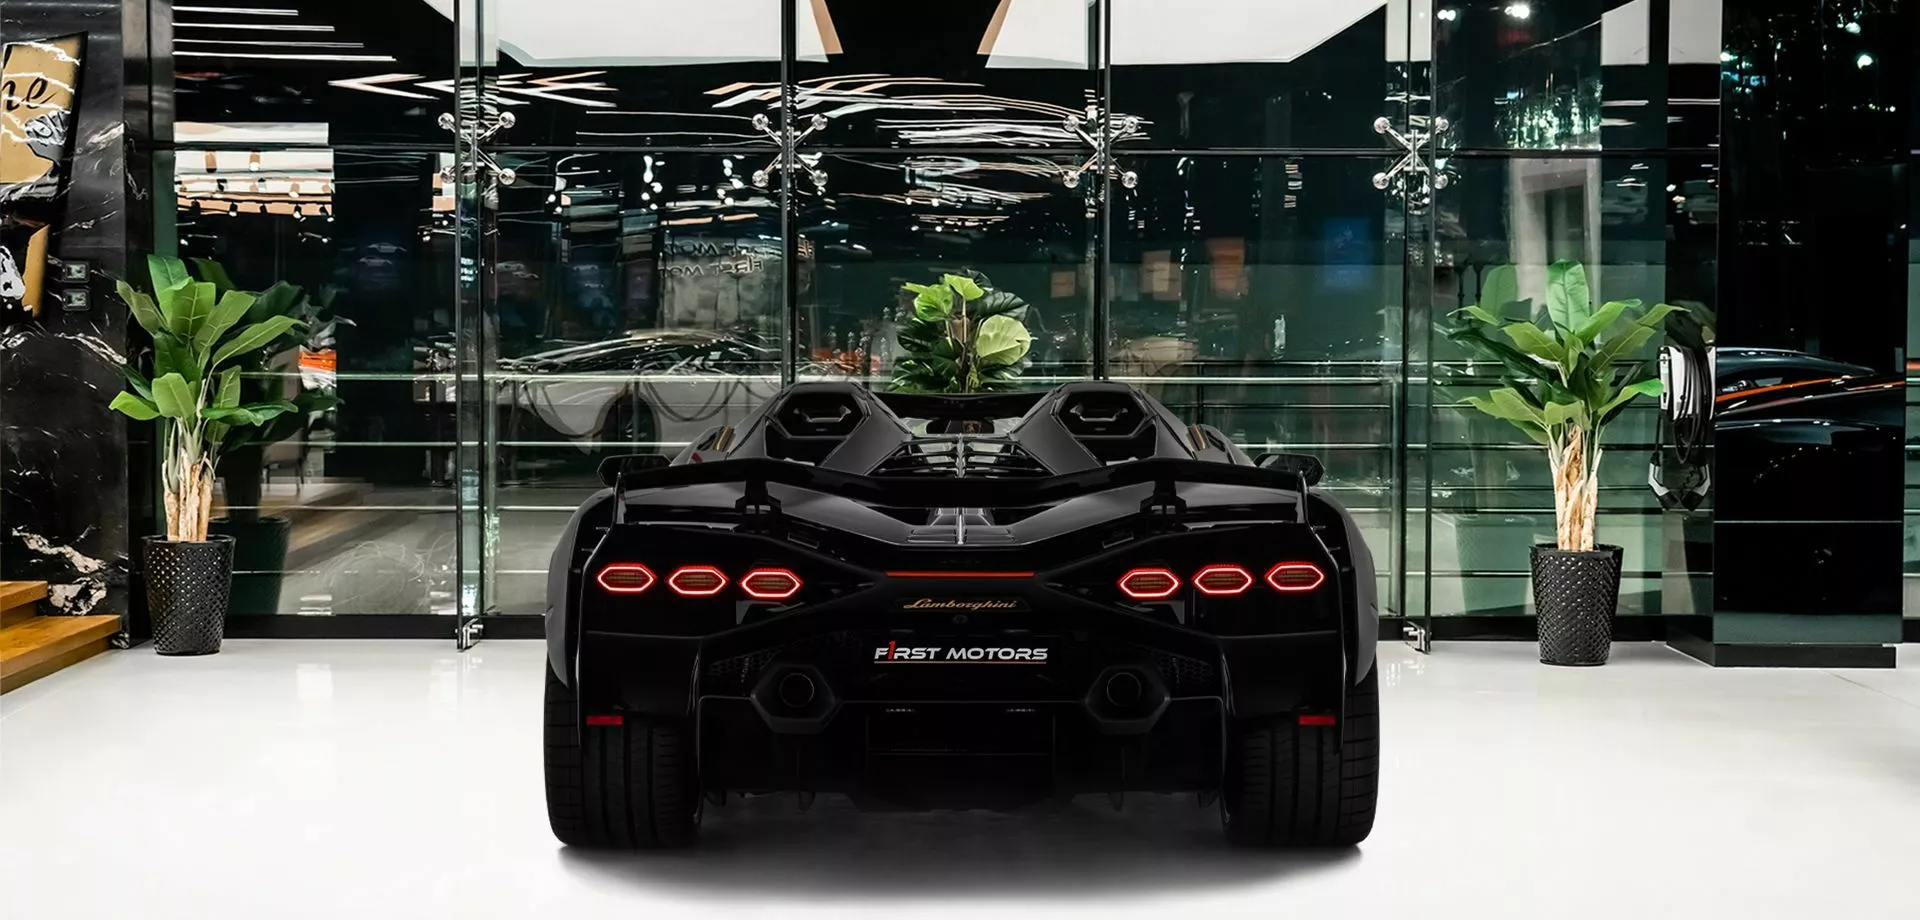 Редчайший супергибрид Lamborghini Sian FKP 37 Roadster появился в продаже в Дубае3